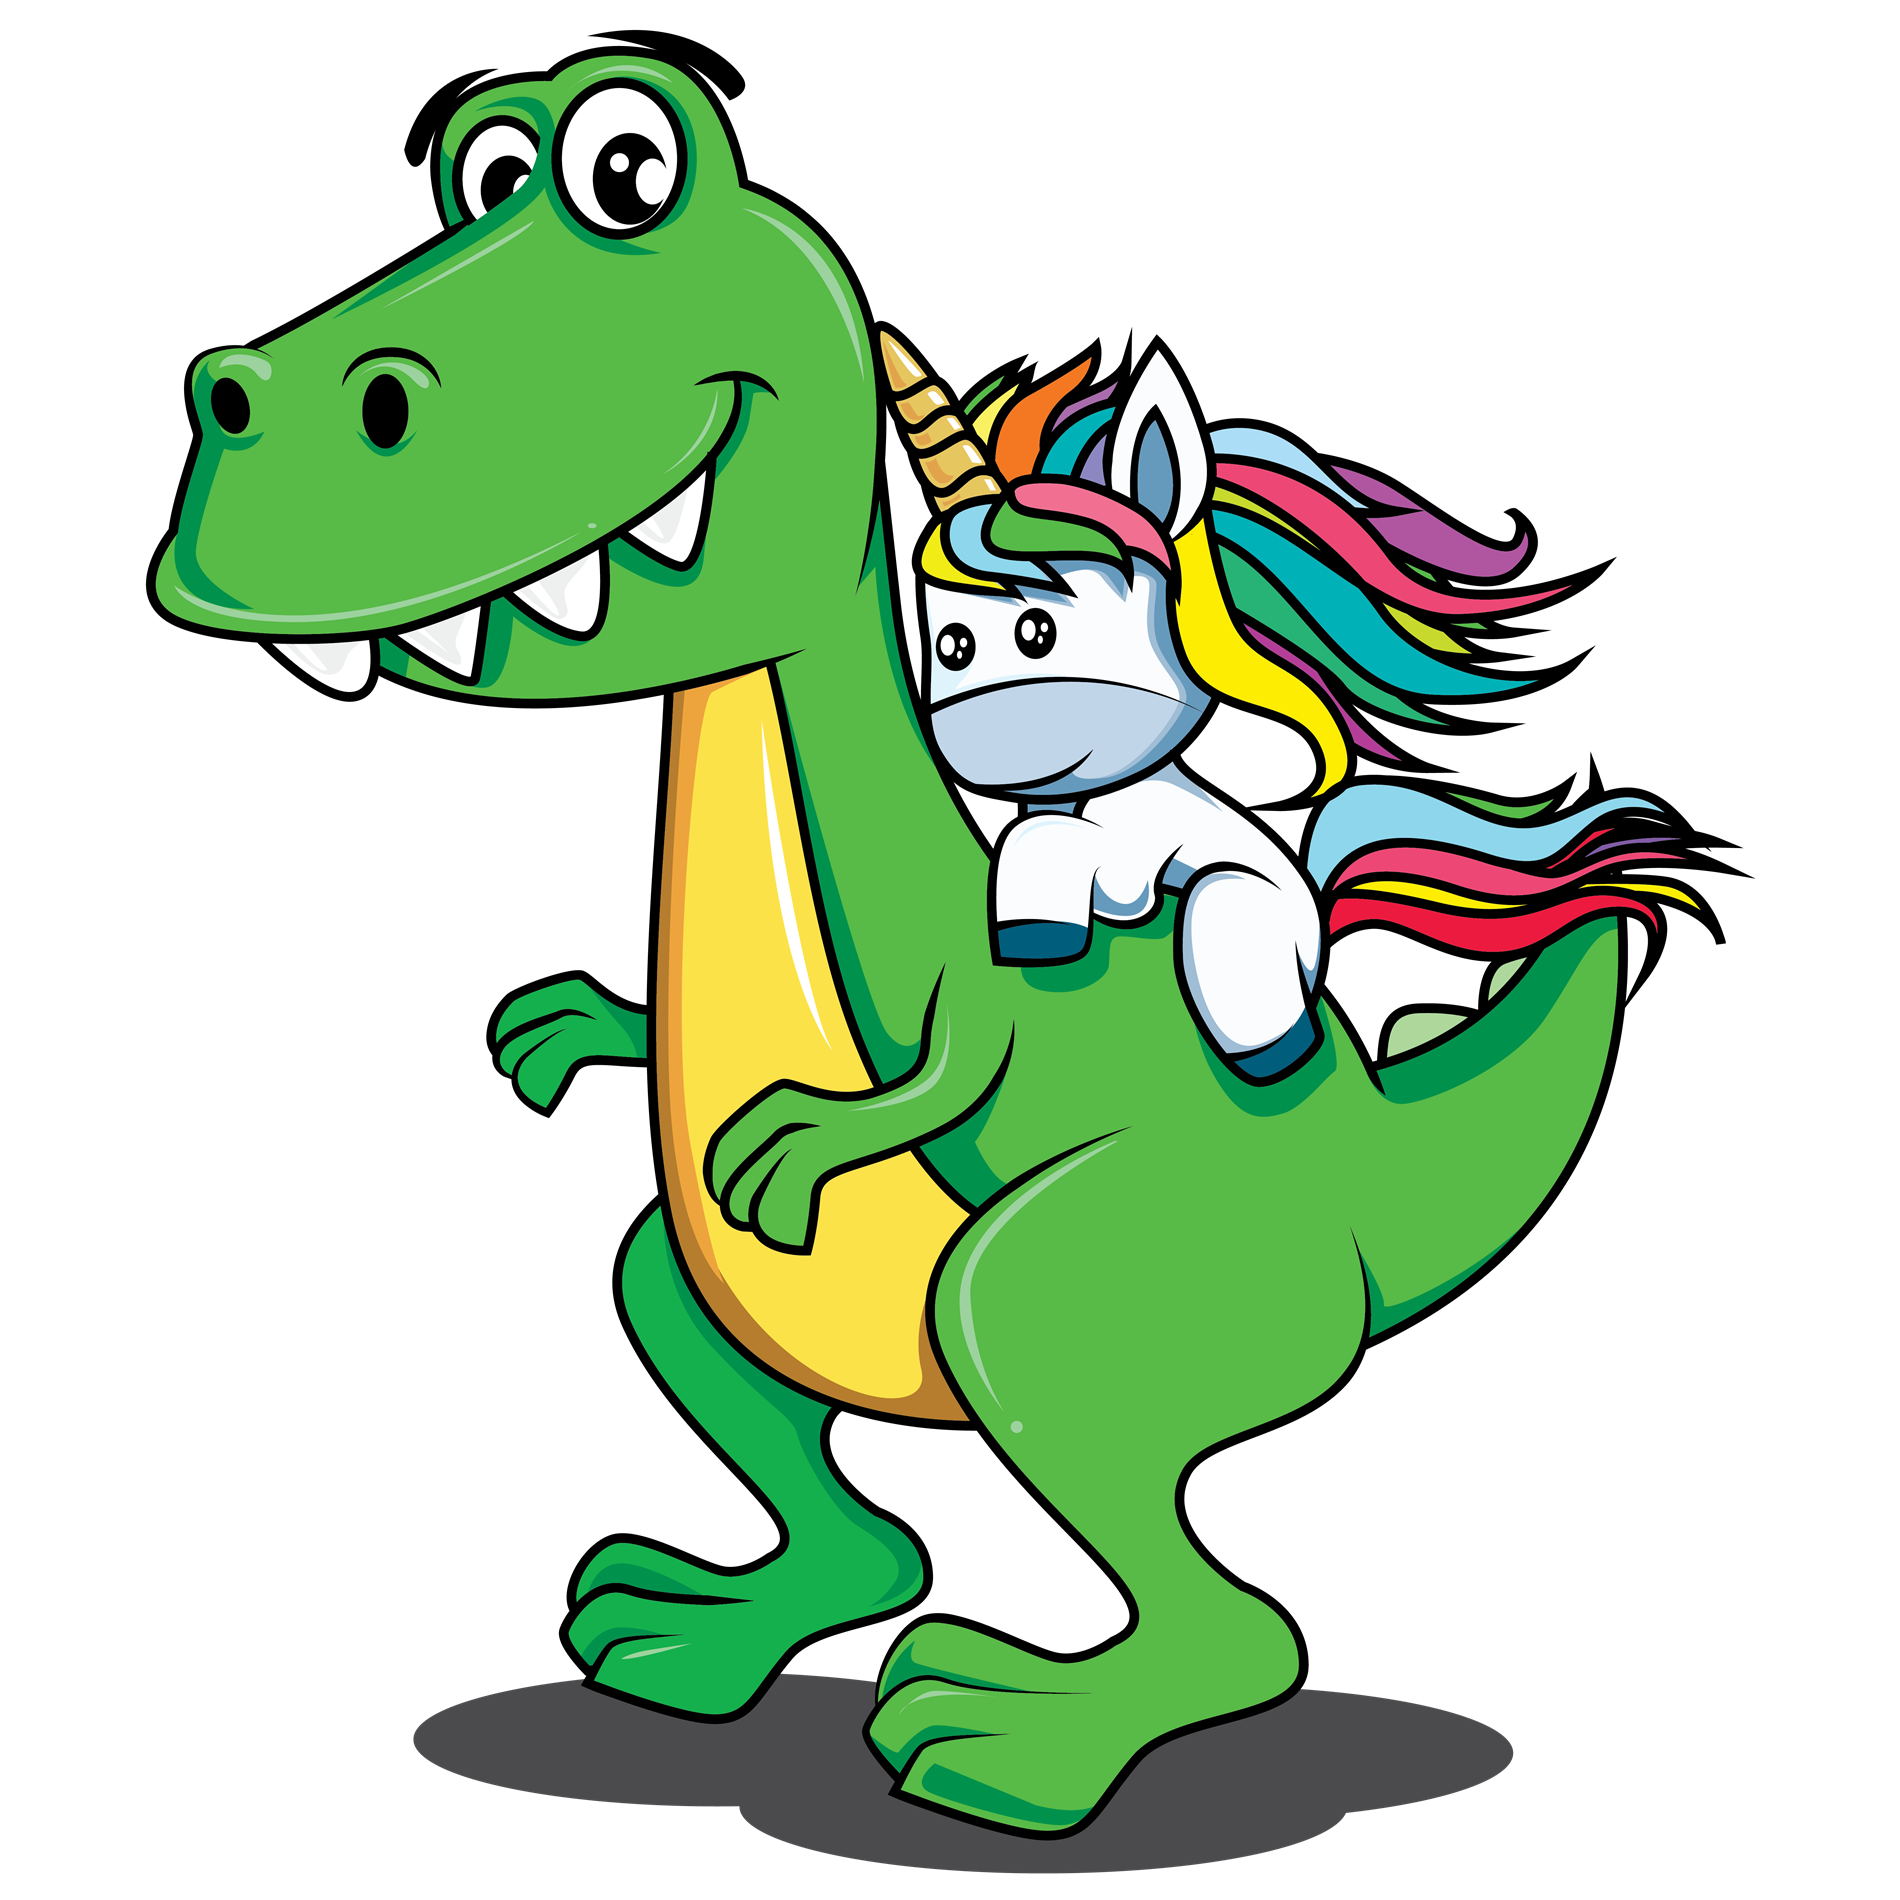 illustrated cartoon image of a cute unicorn riding nice t-rex-type dinosaur 